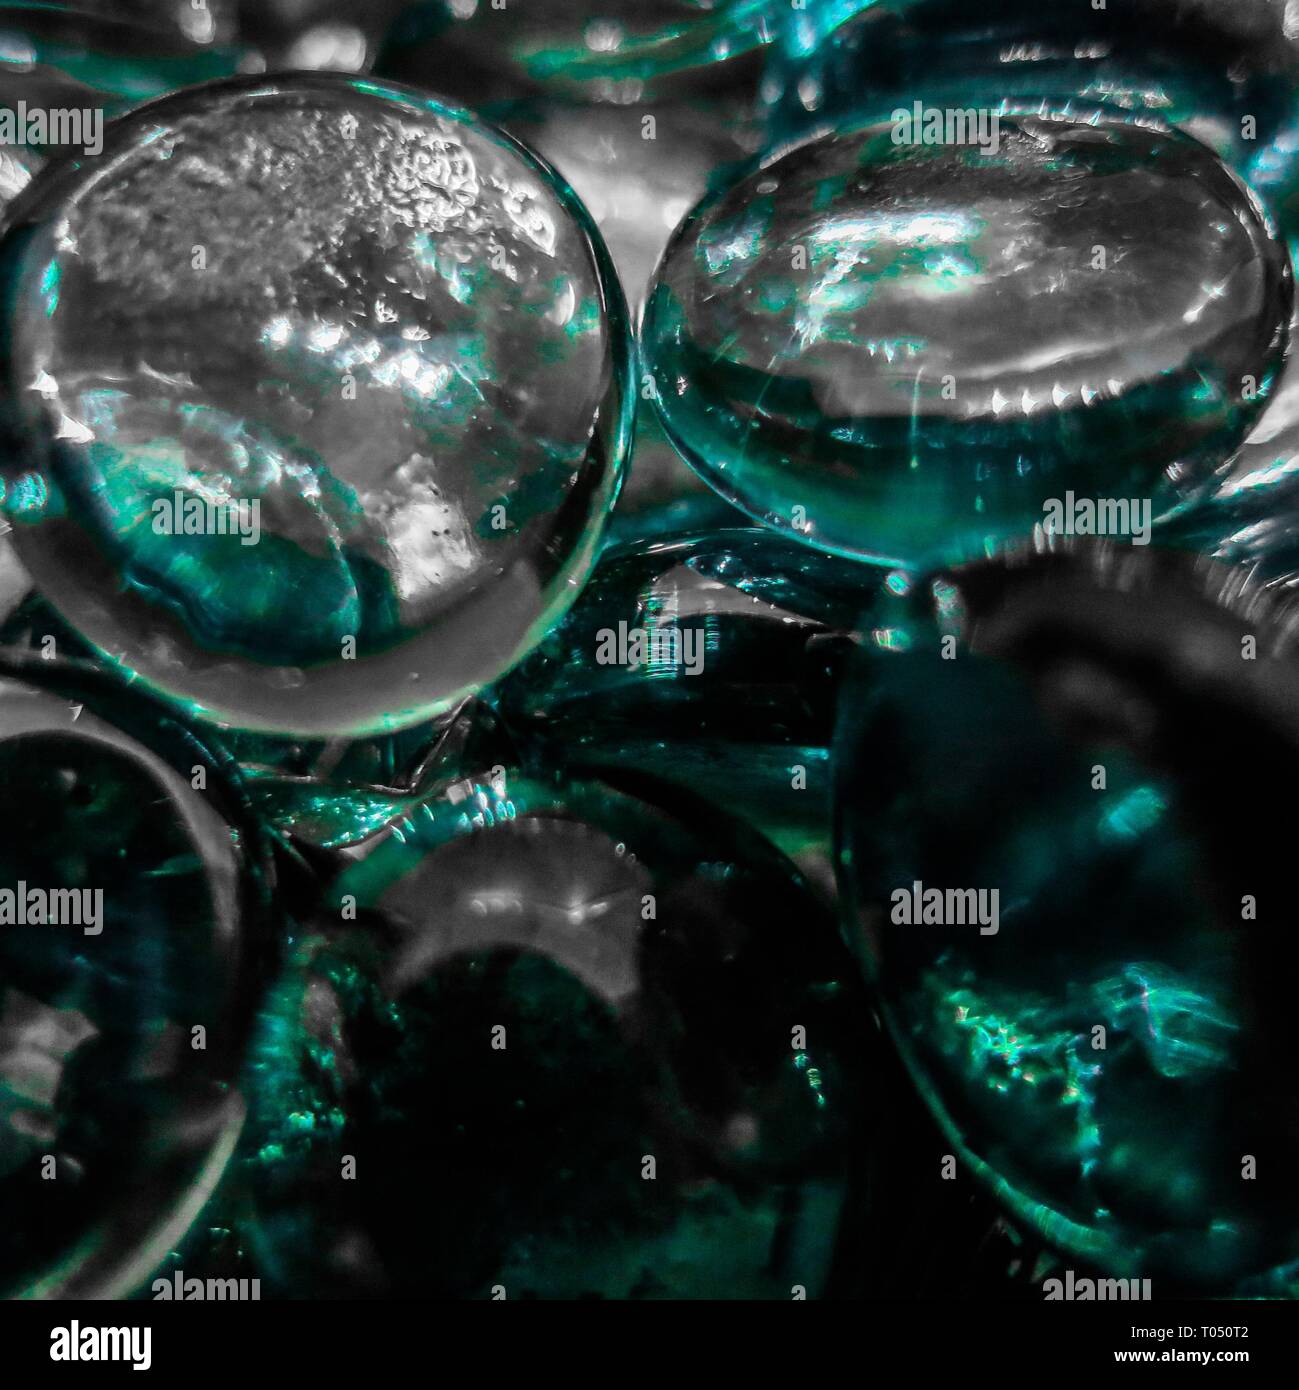 Decorative glass marbles. Concept : parallel universes. Stock Photo